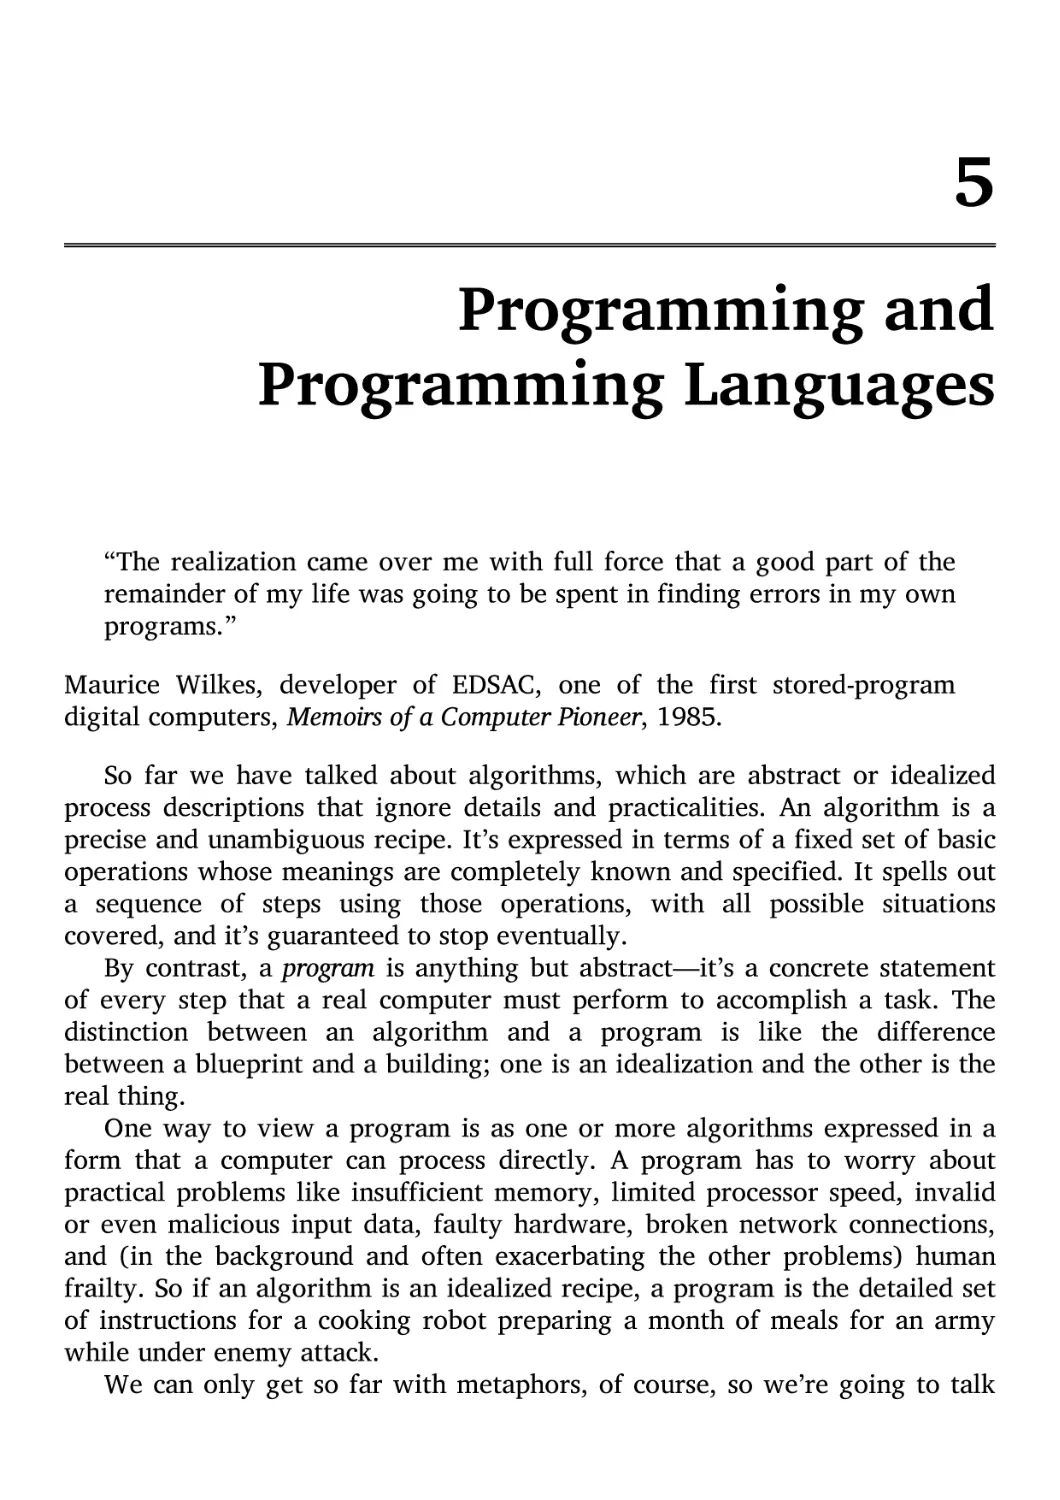 5. Programming and Programming Languages